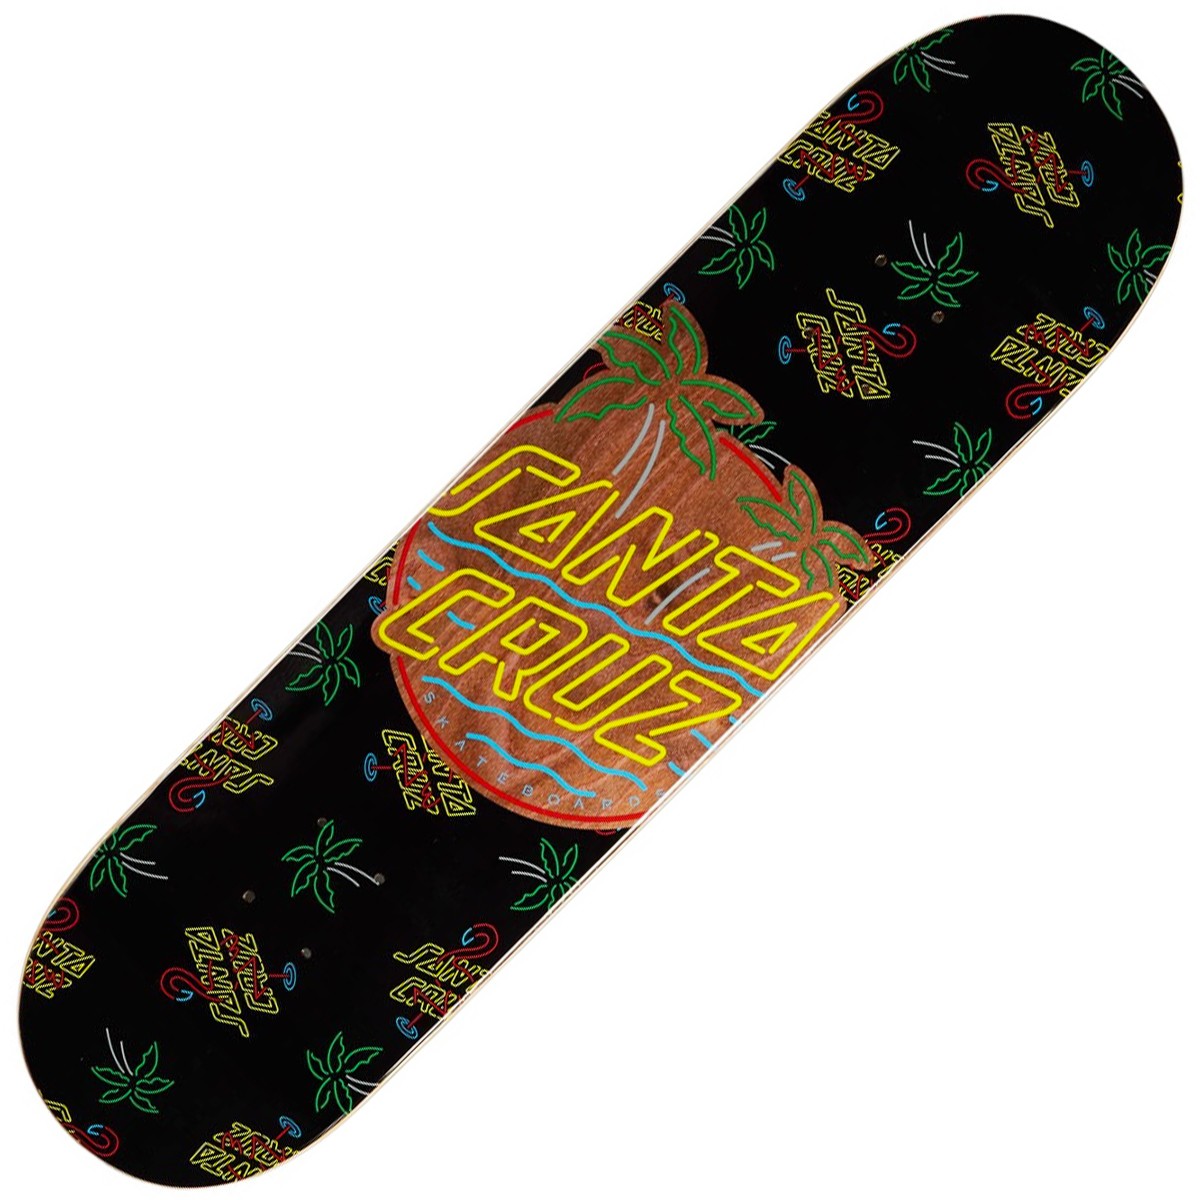 SANTA CRUZ “Glow Dot Hardrock Maple” skateboard deck 7.75